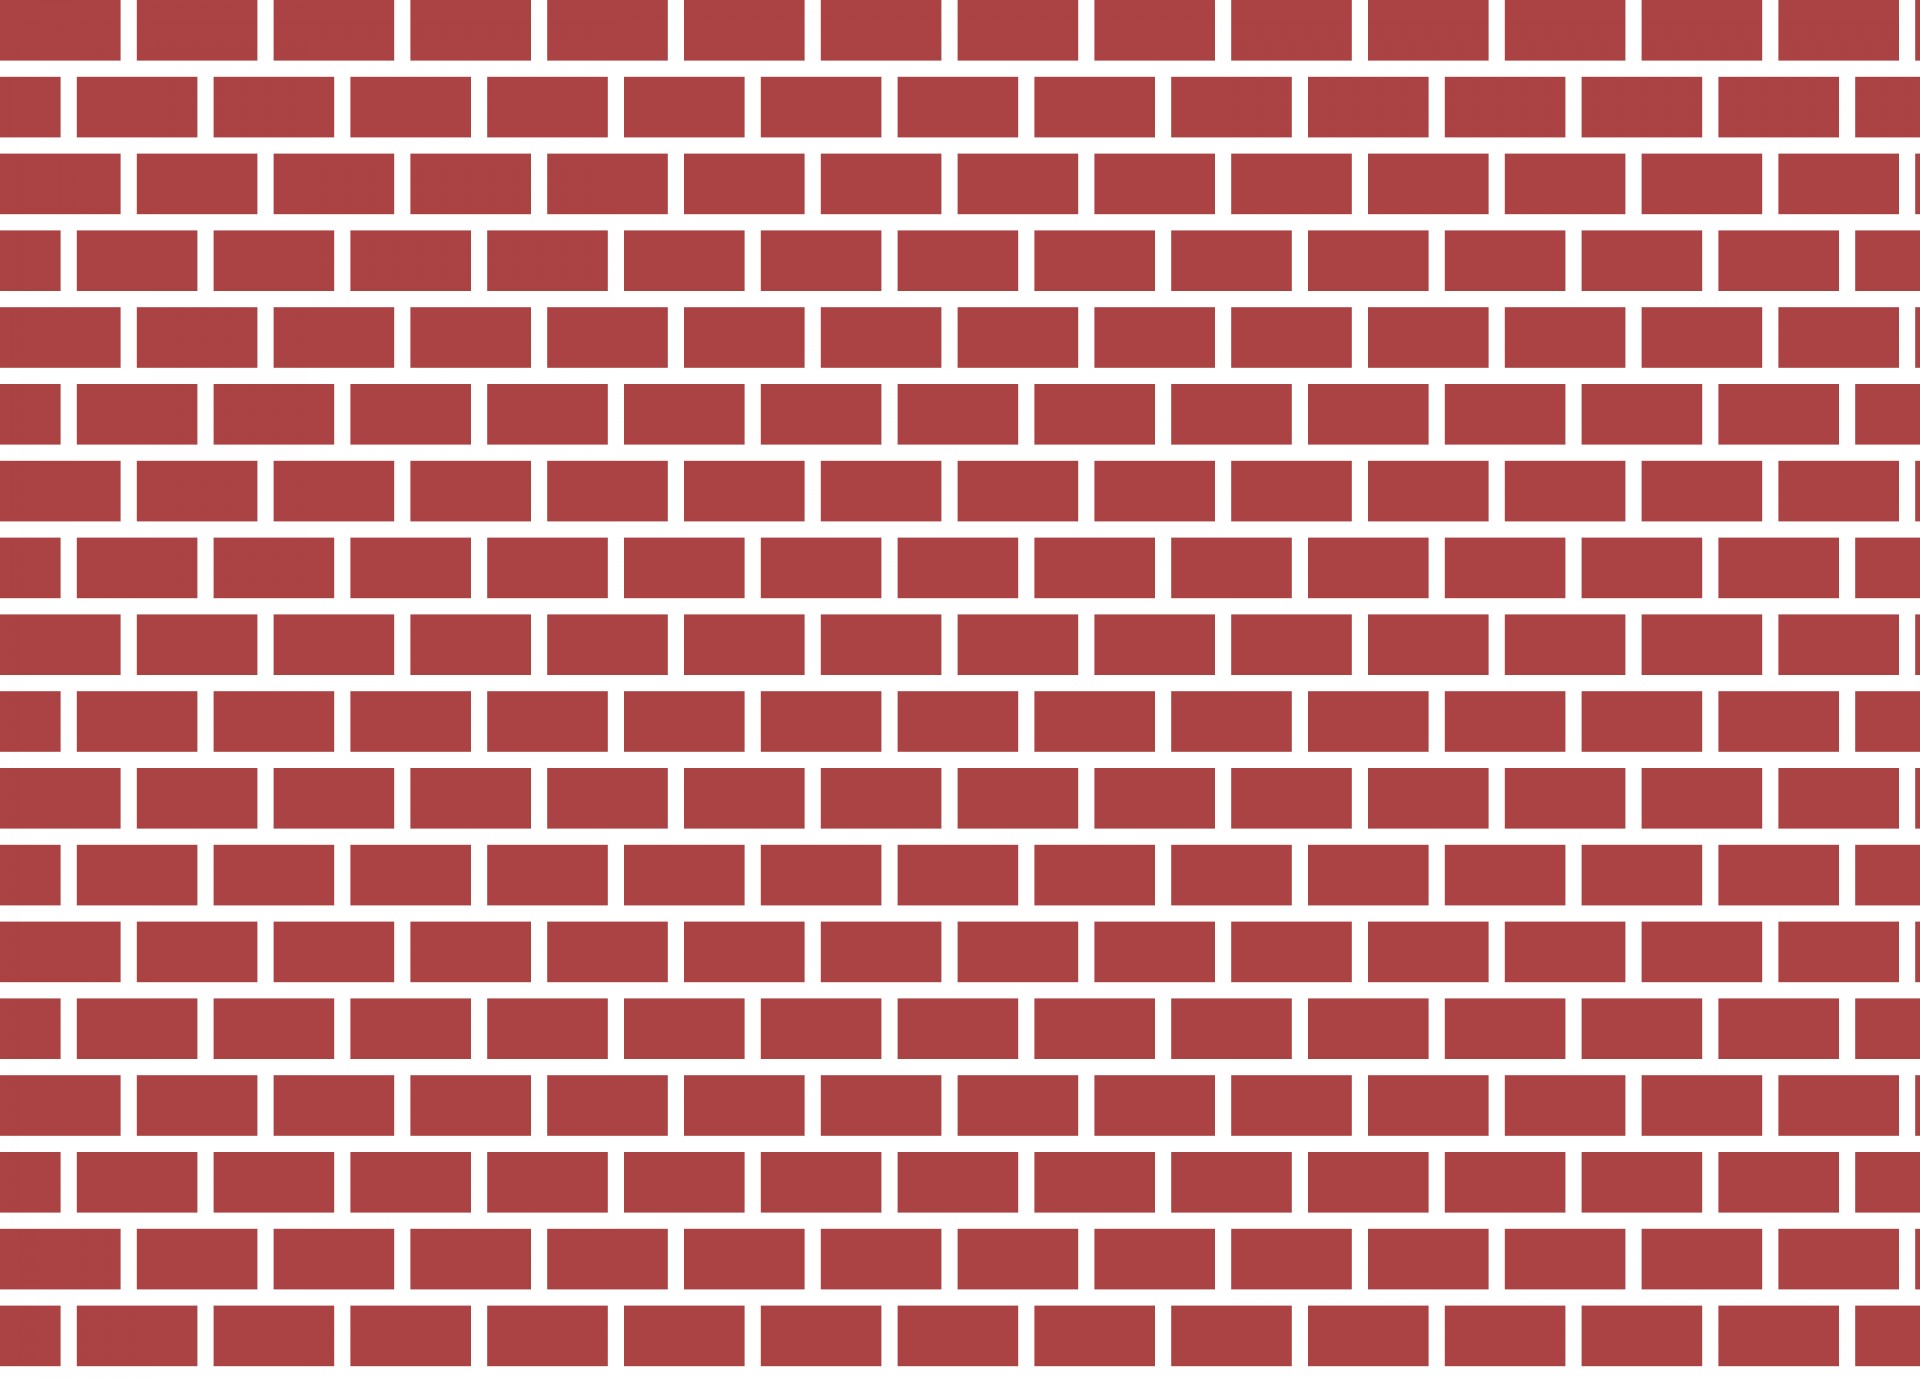 Stack of red bricks vector ar